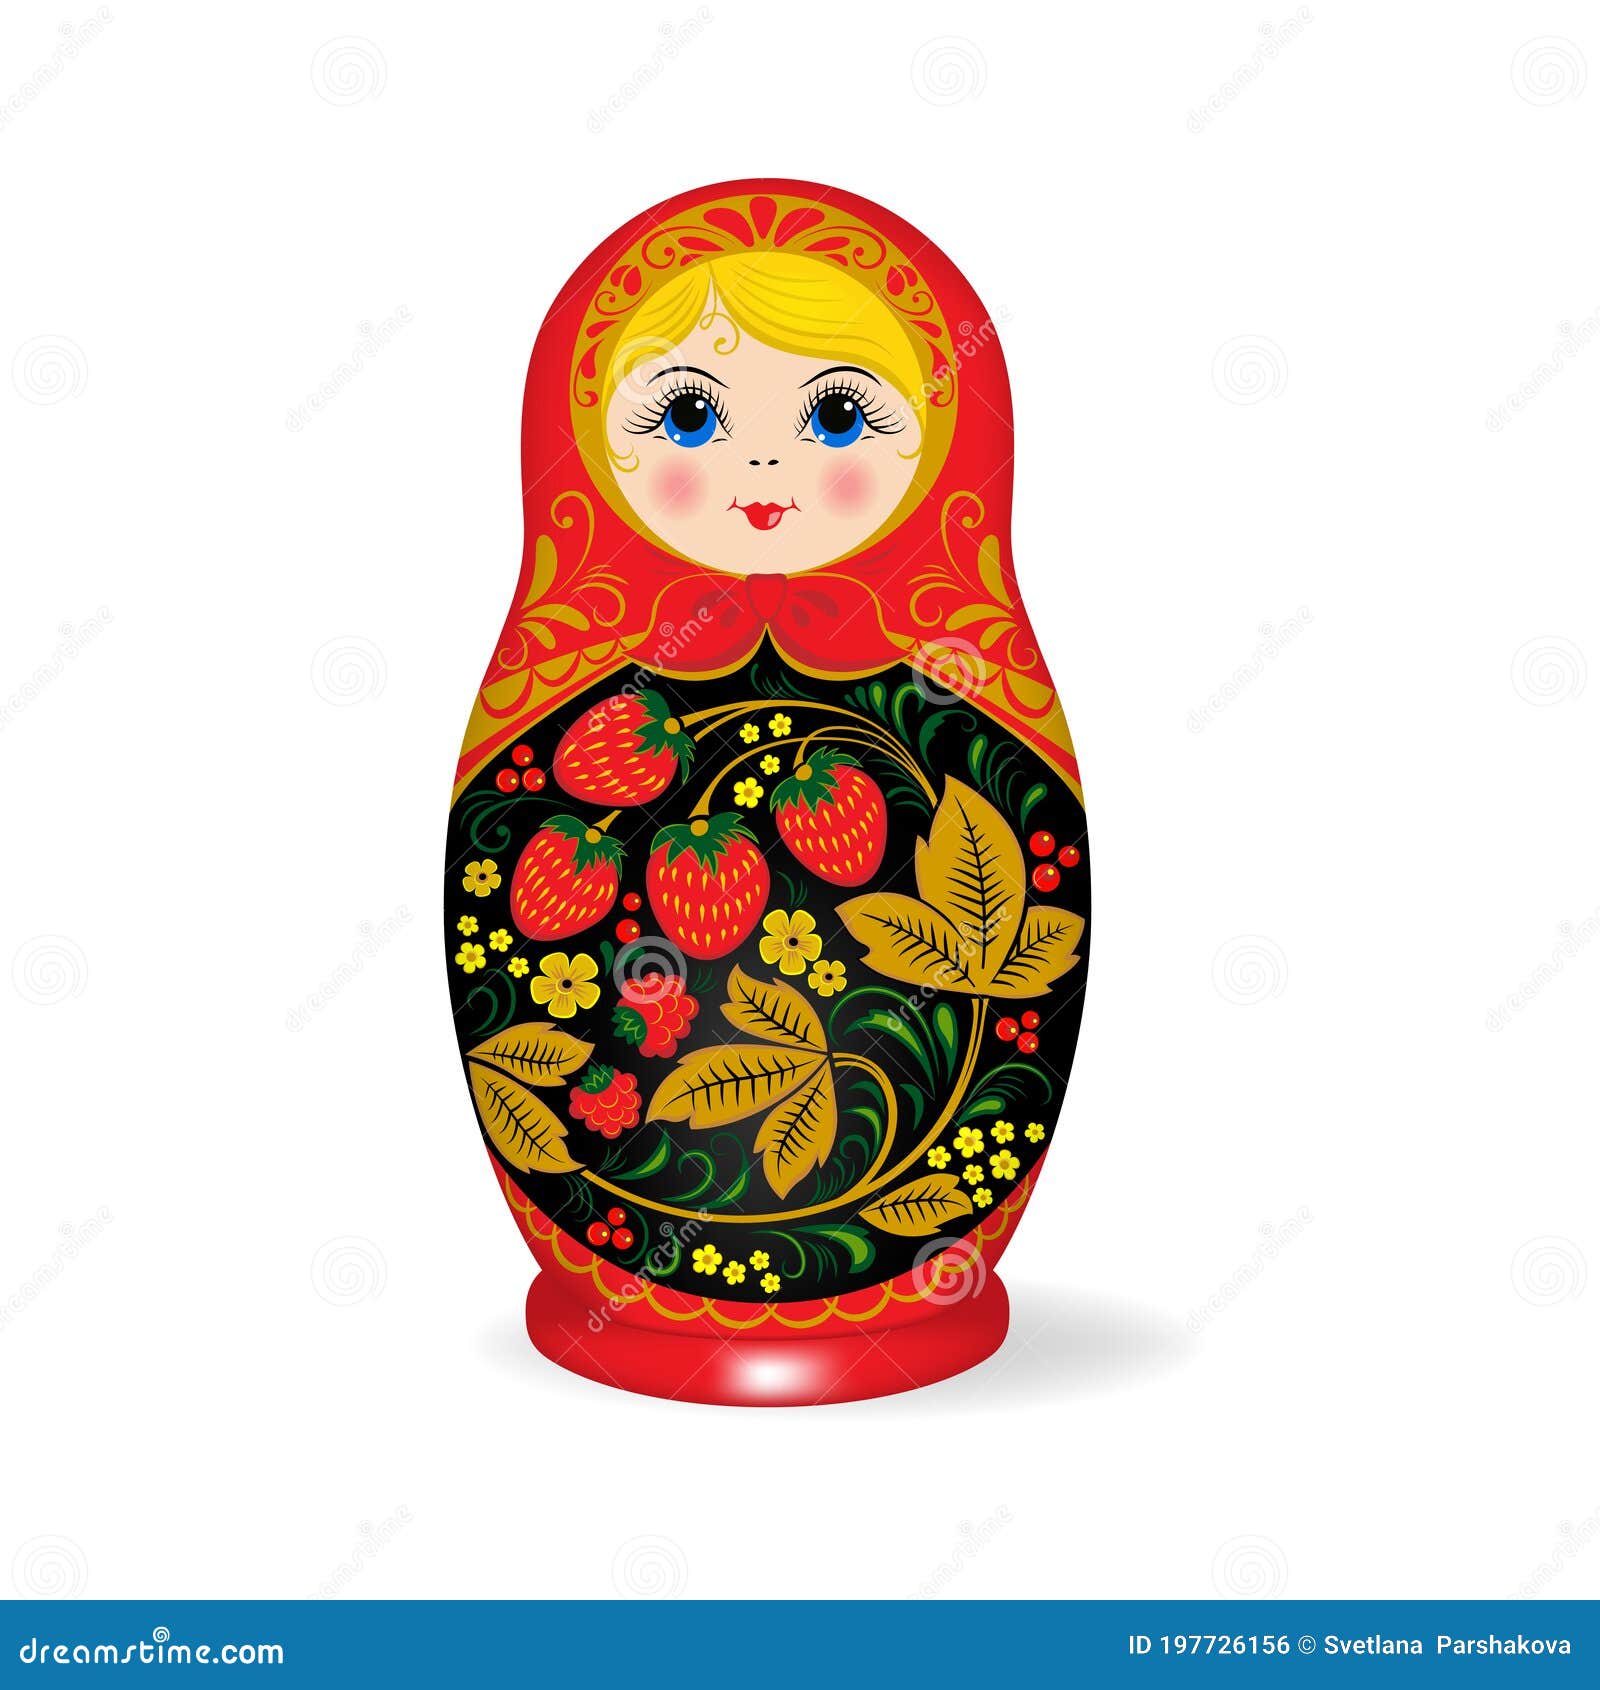 Rusa matrioska babuschka marioneta rusa pueblo pintura 5 muñecas 15cm alto 